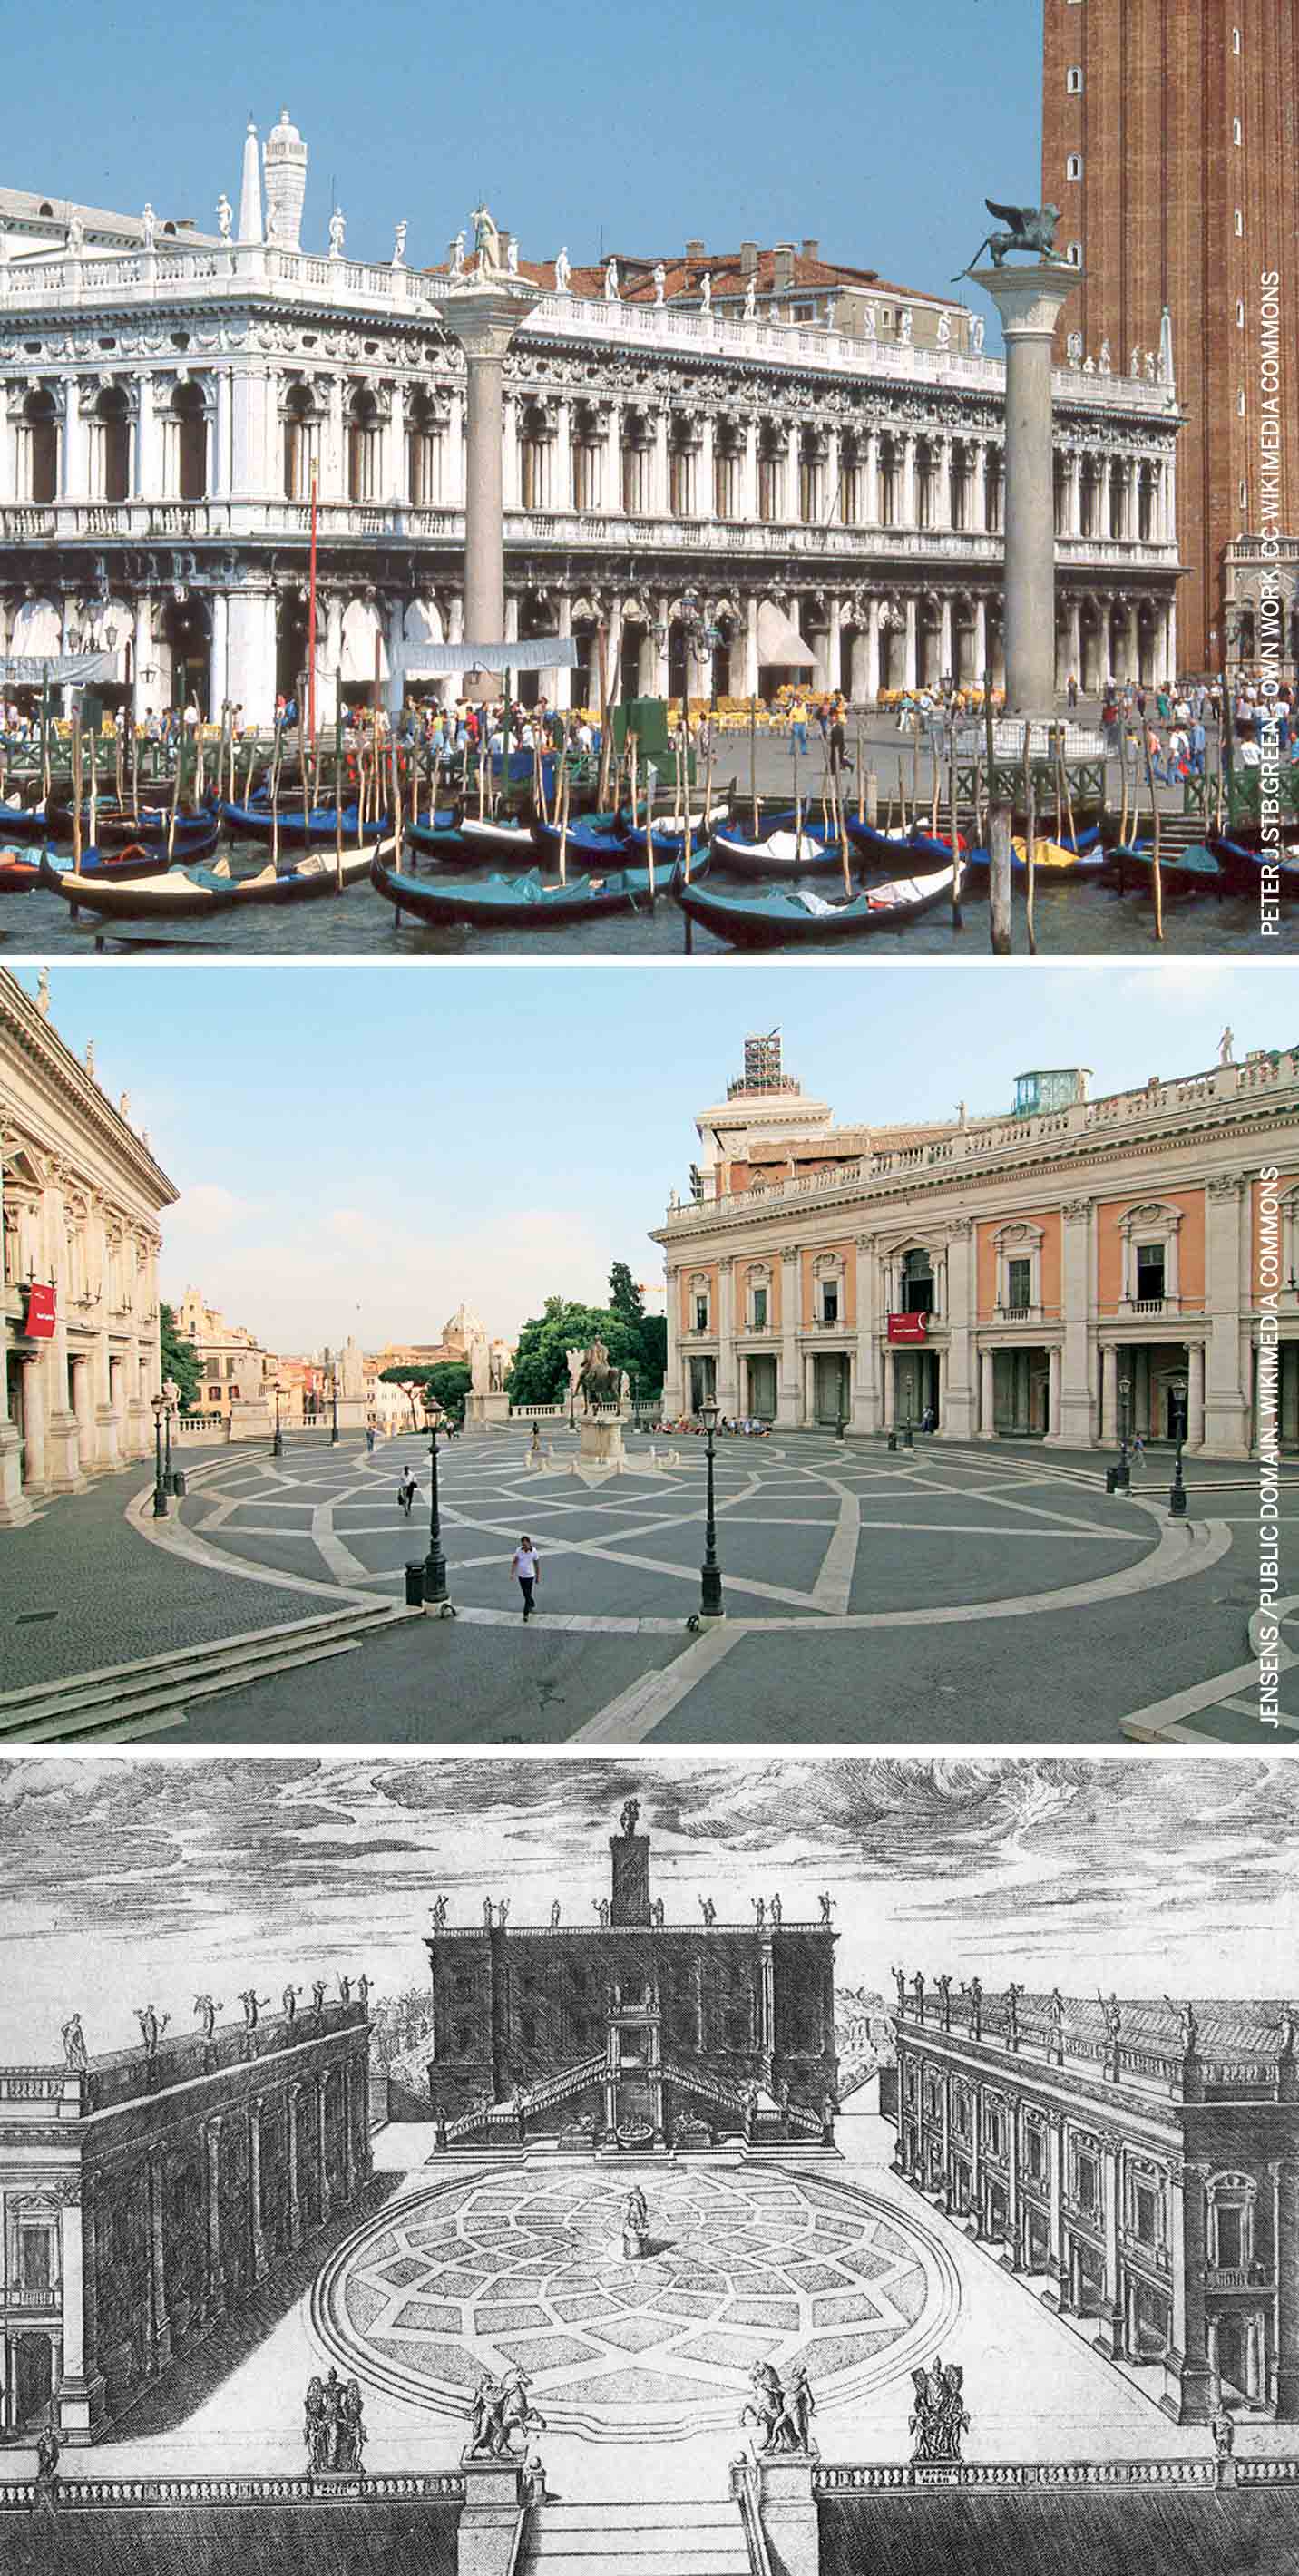 sculpting-organised-urban-design-piazzetta-san-marco-view-from-saint-marks-basillica-campidoglio-rome